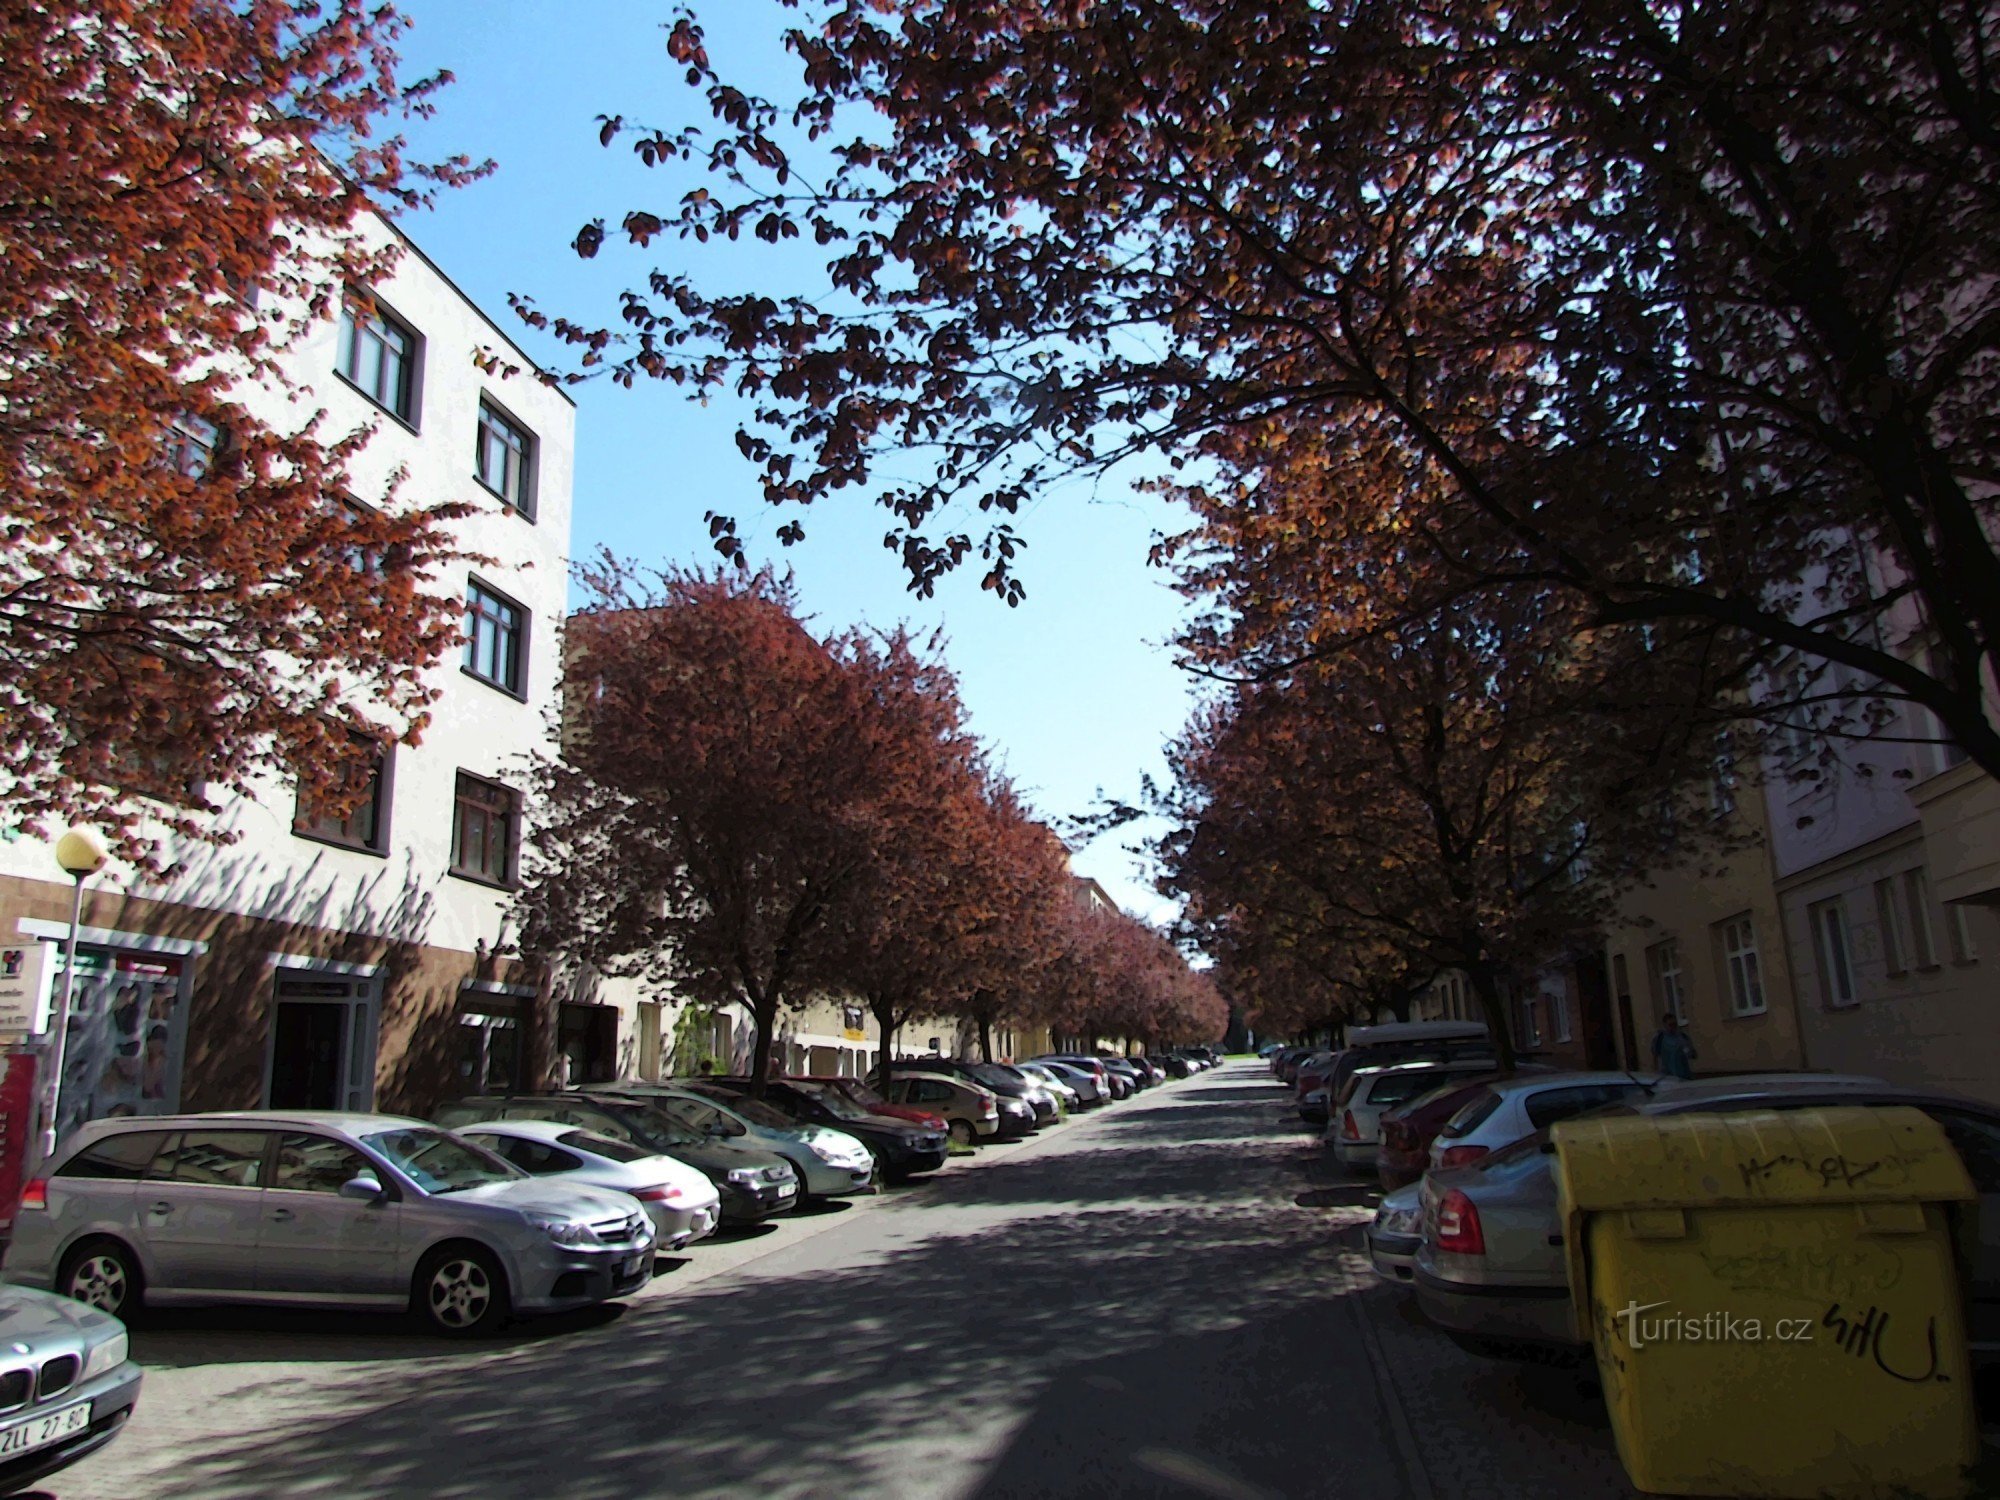 Sadová street